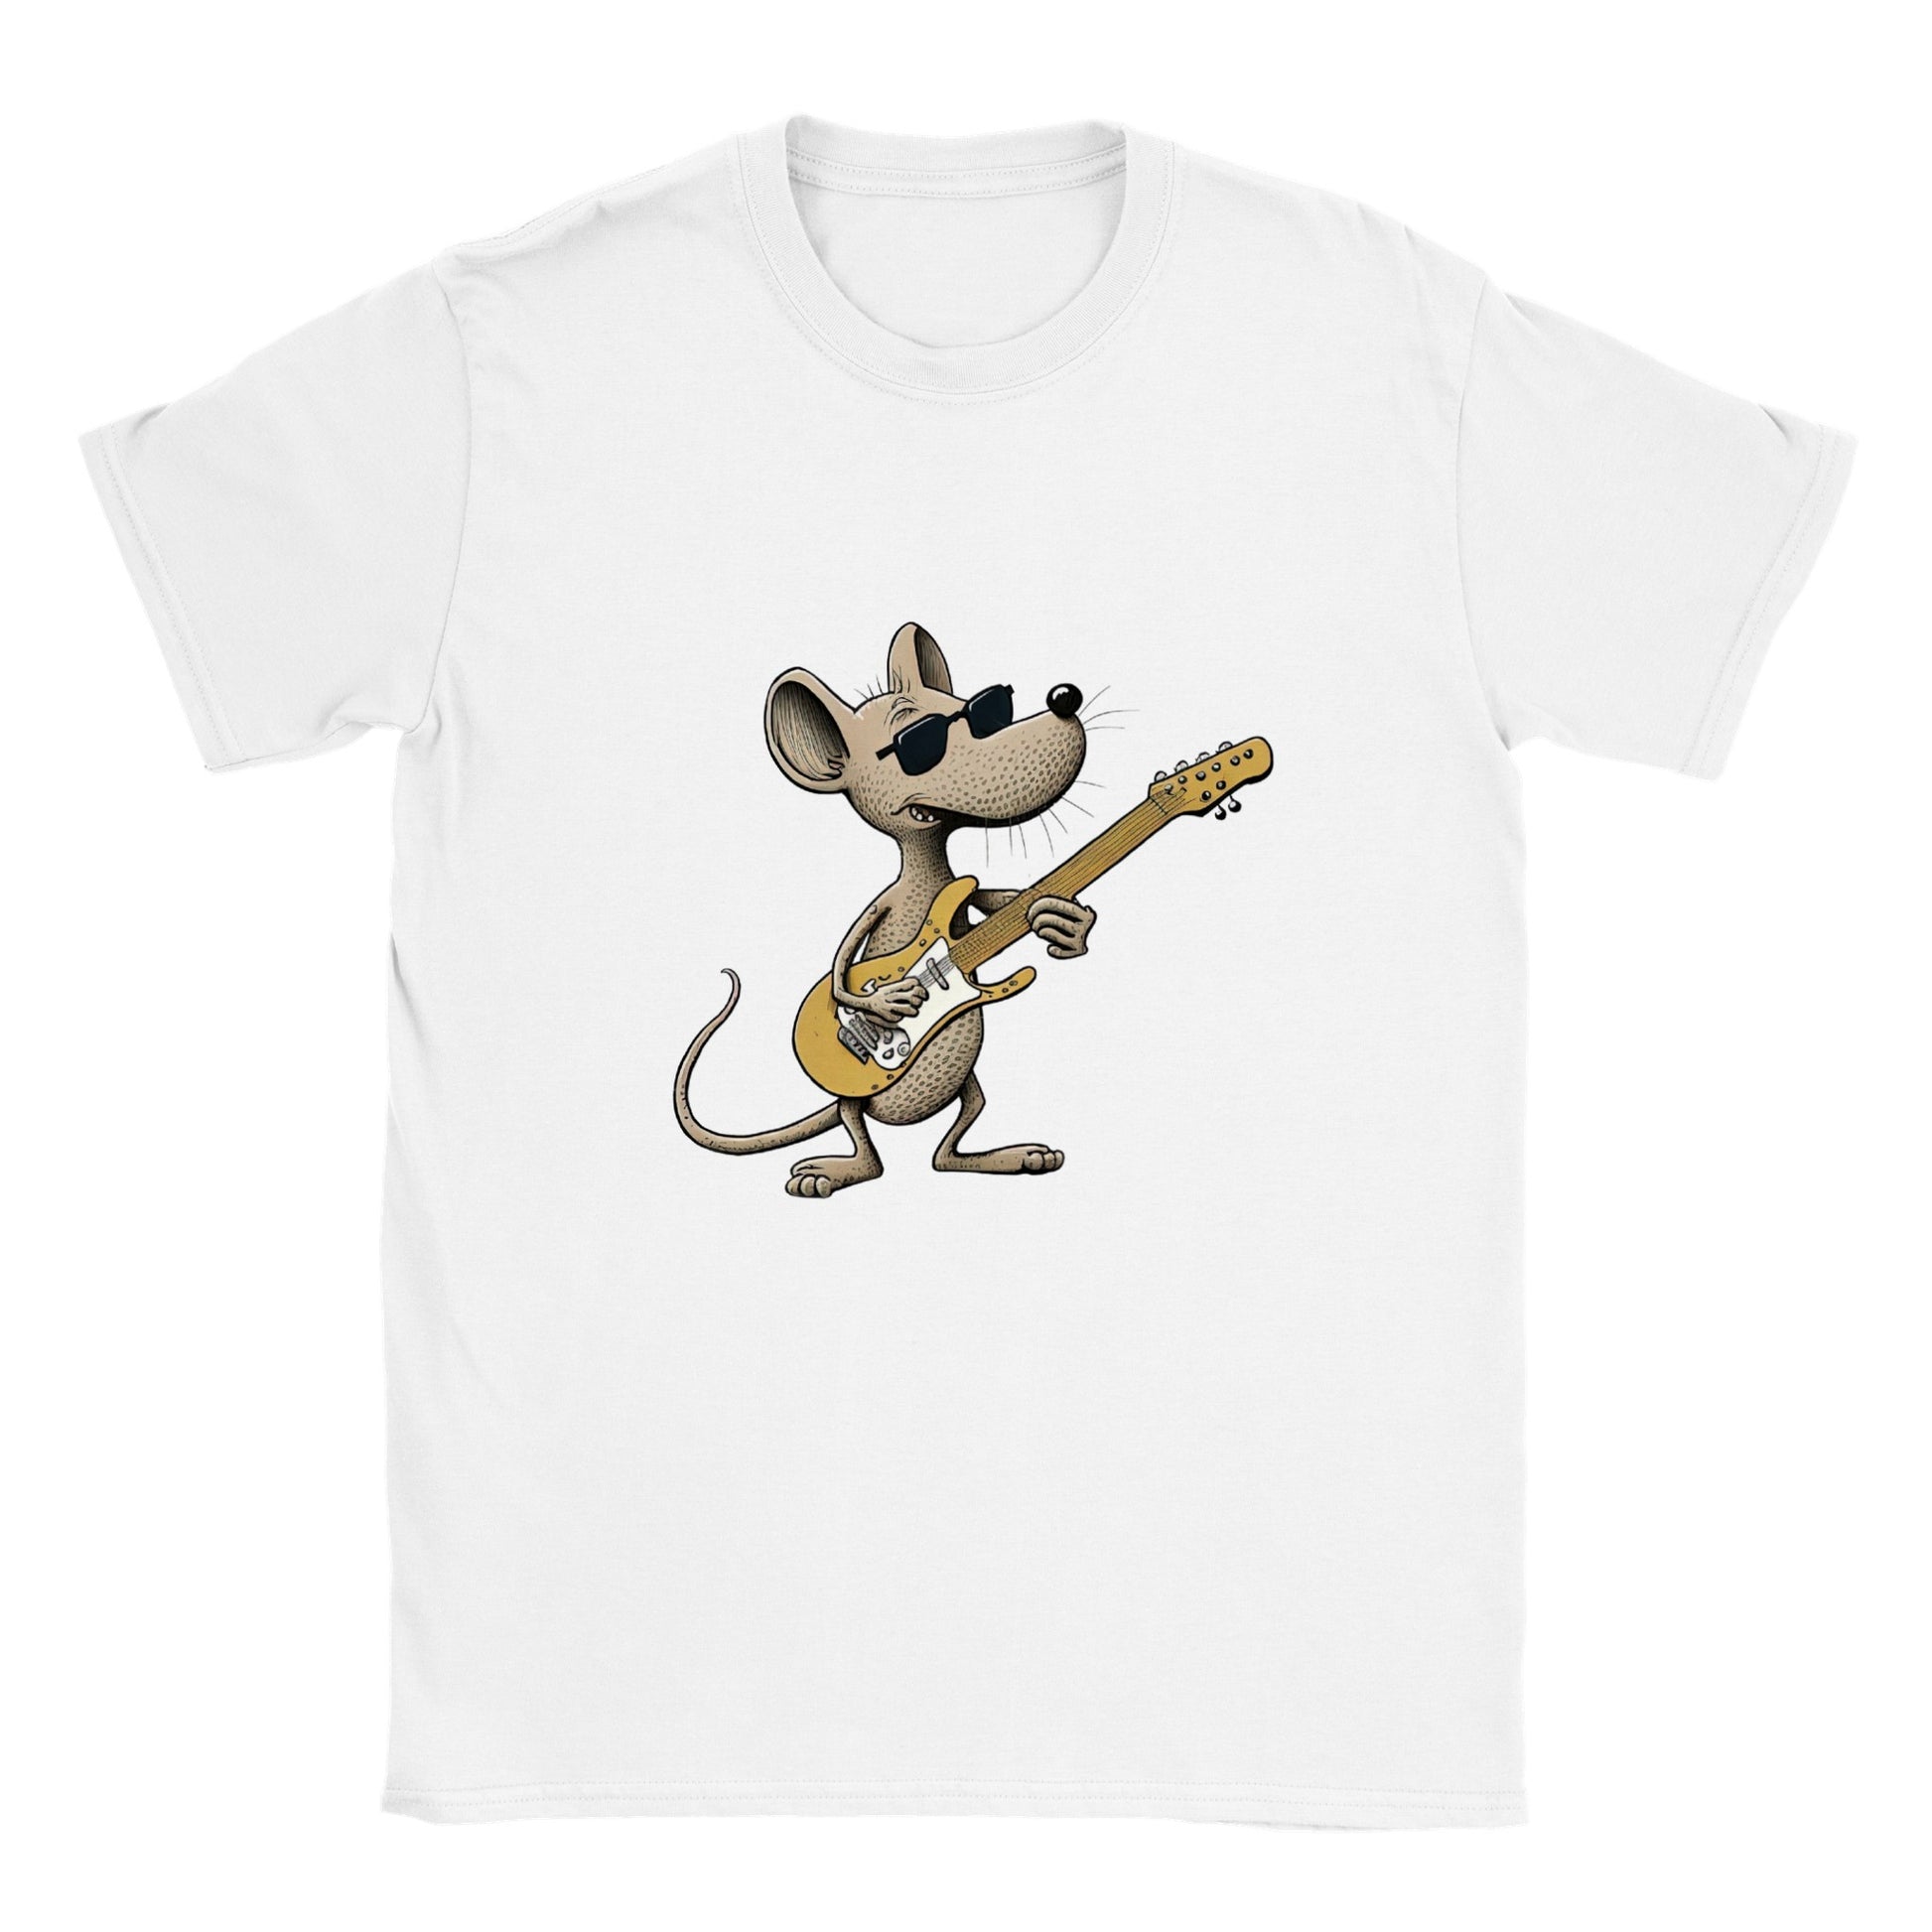 Cool rat playing a guitar print on white t-shirt